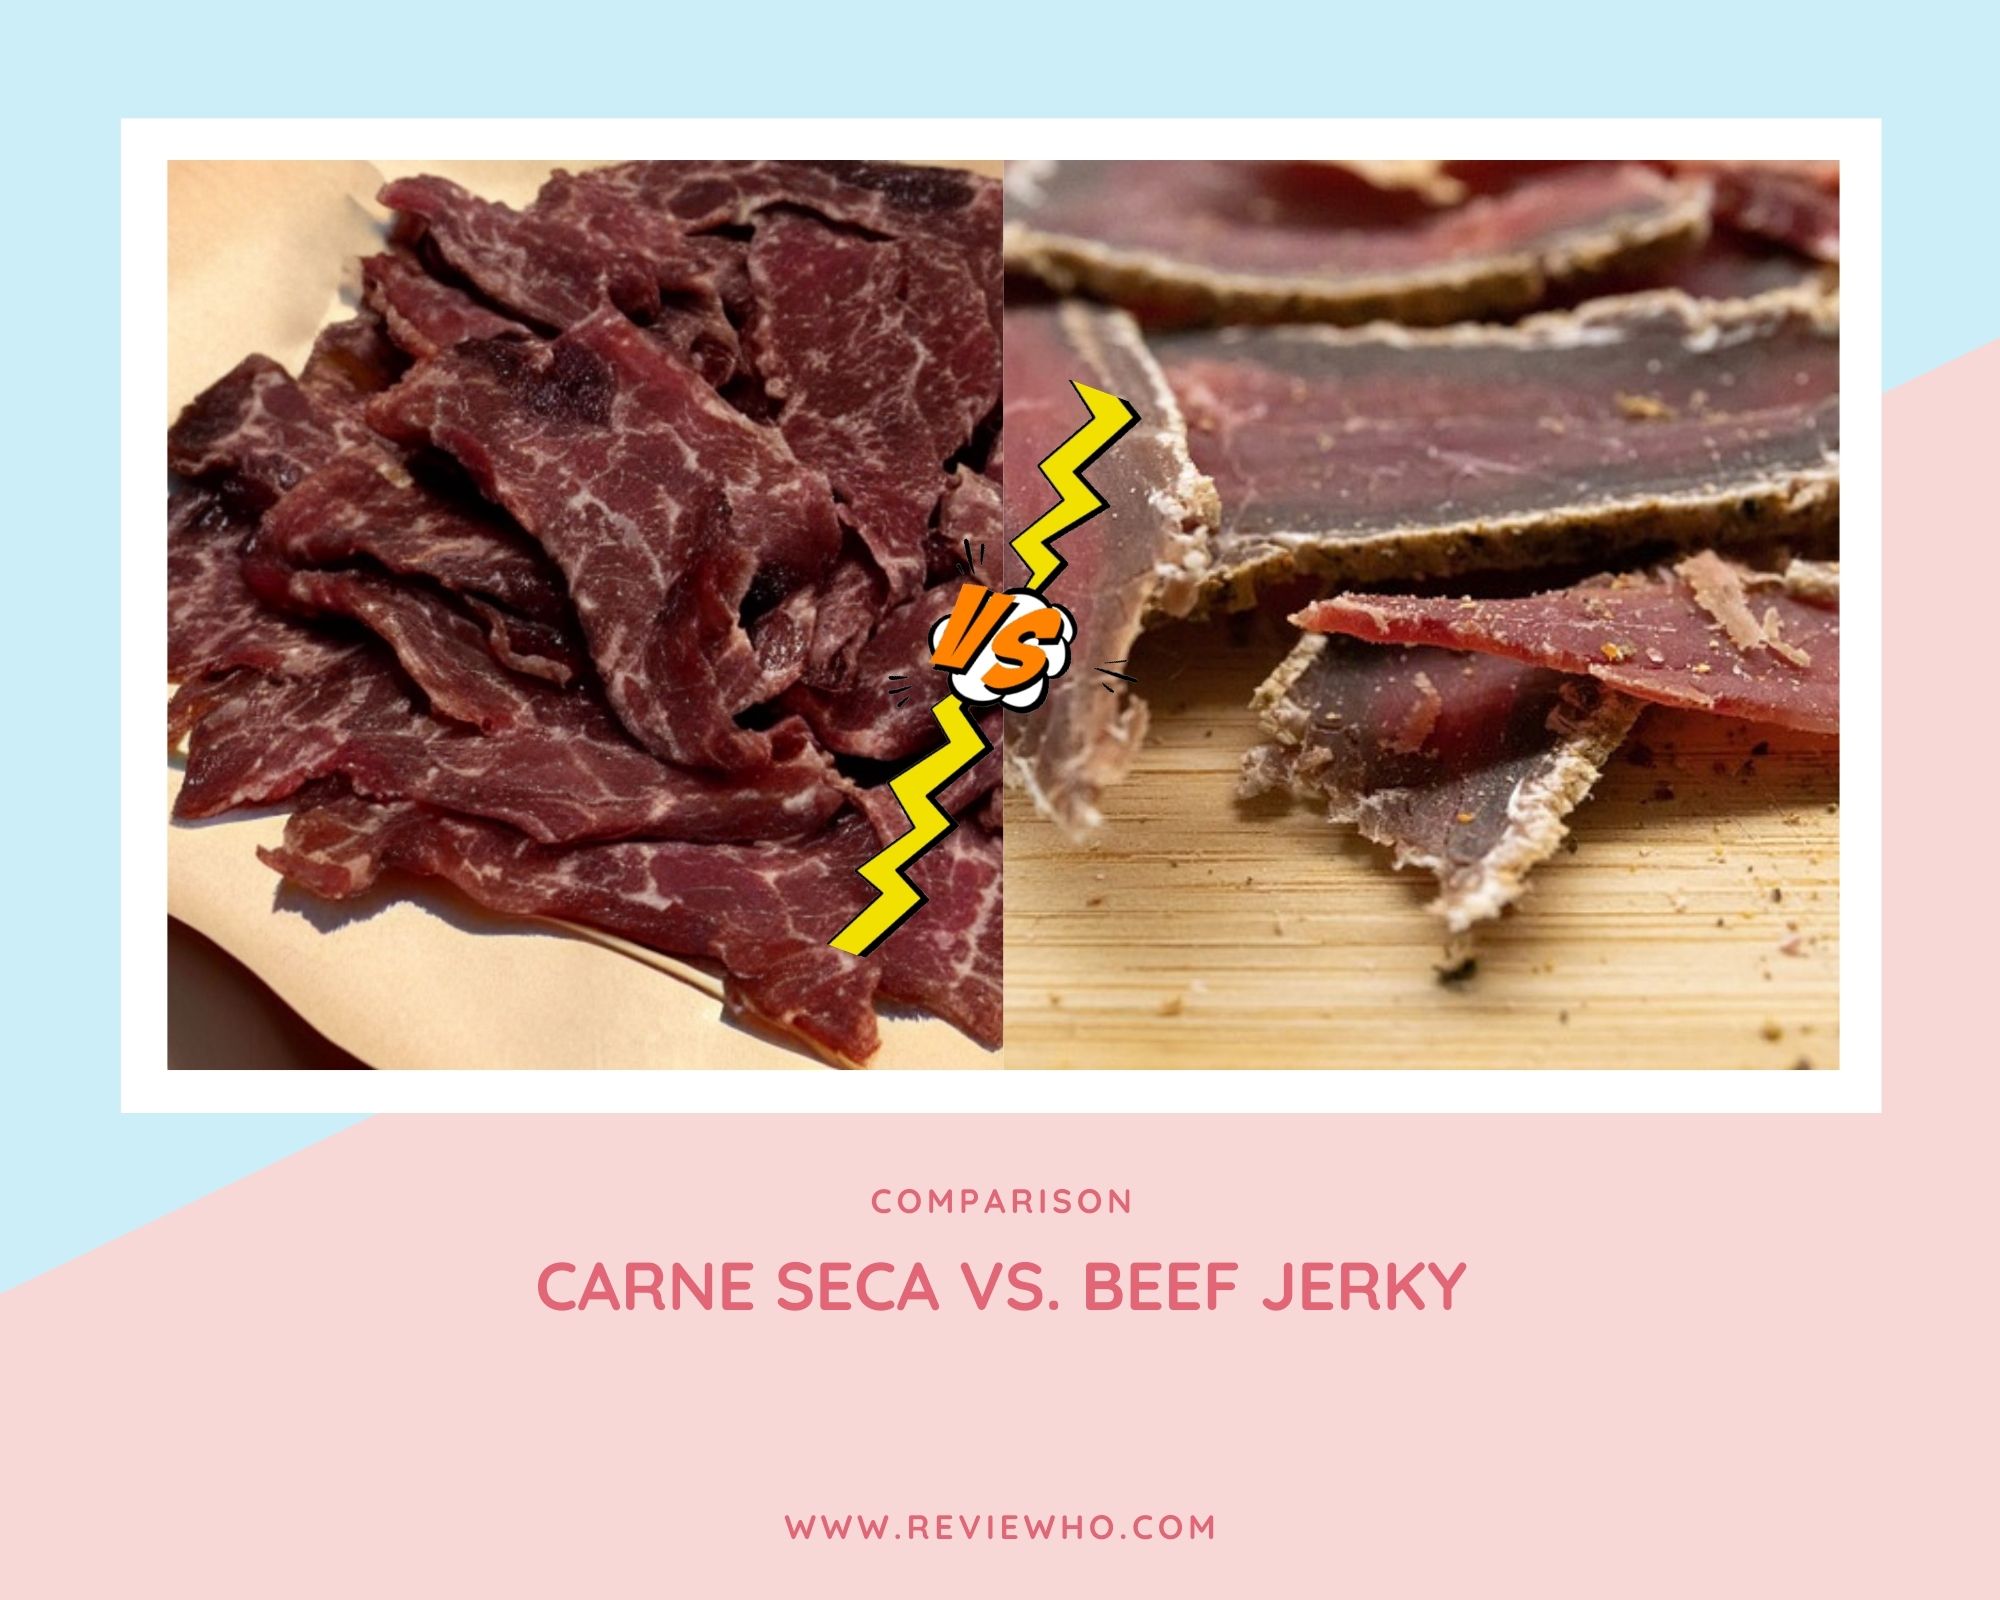 Is carne seca the same as beef jerky